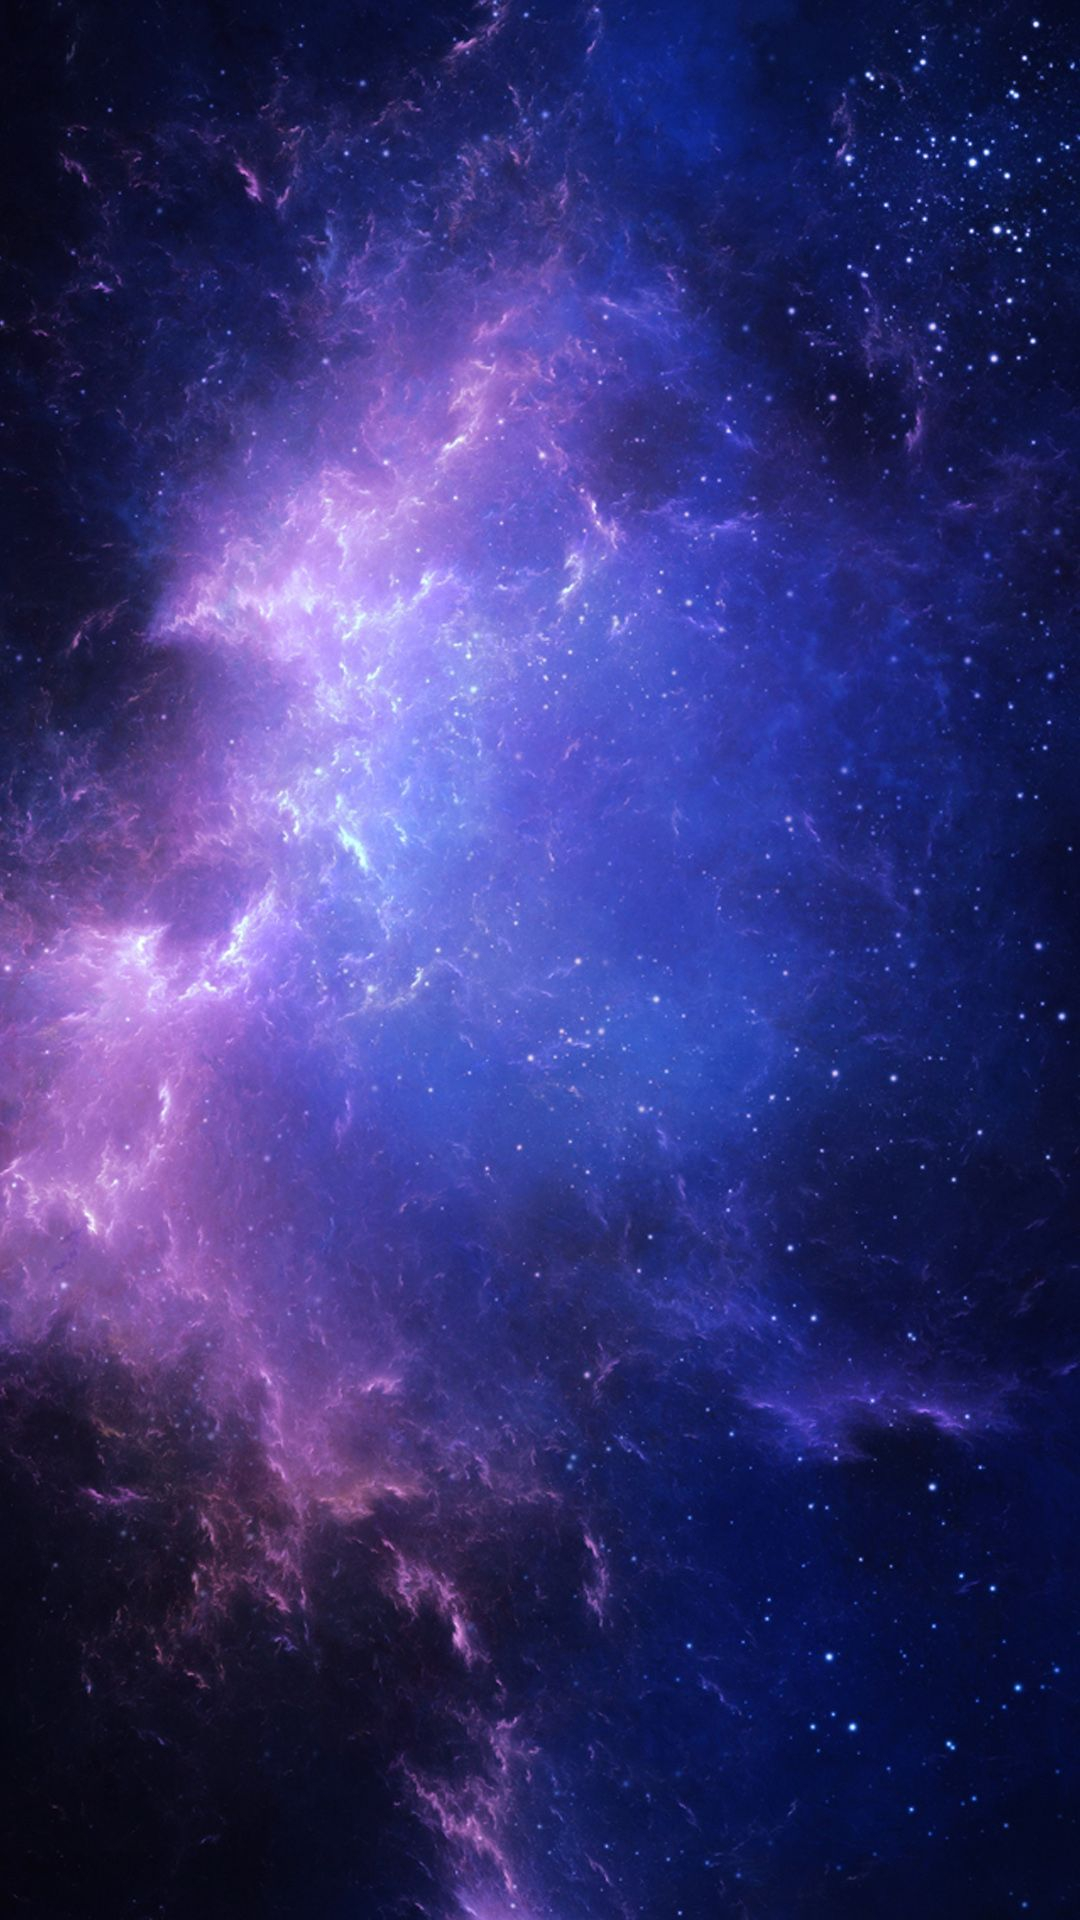 1080x1920 Wallpapers Galaxy Group (89 ) | Purple galaxy wallpaper, Galaxy wallpaper, Galaxy pictures